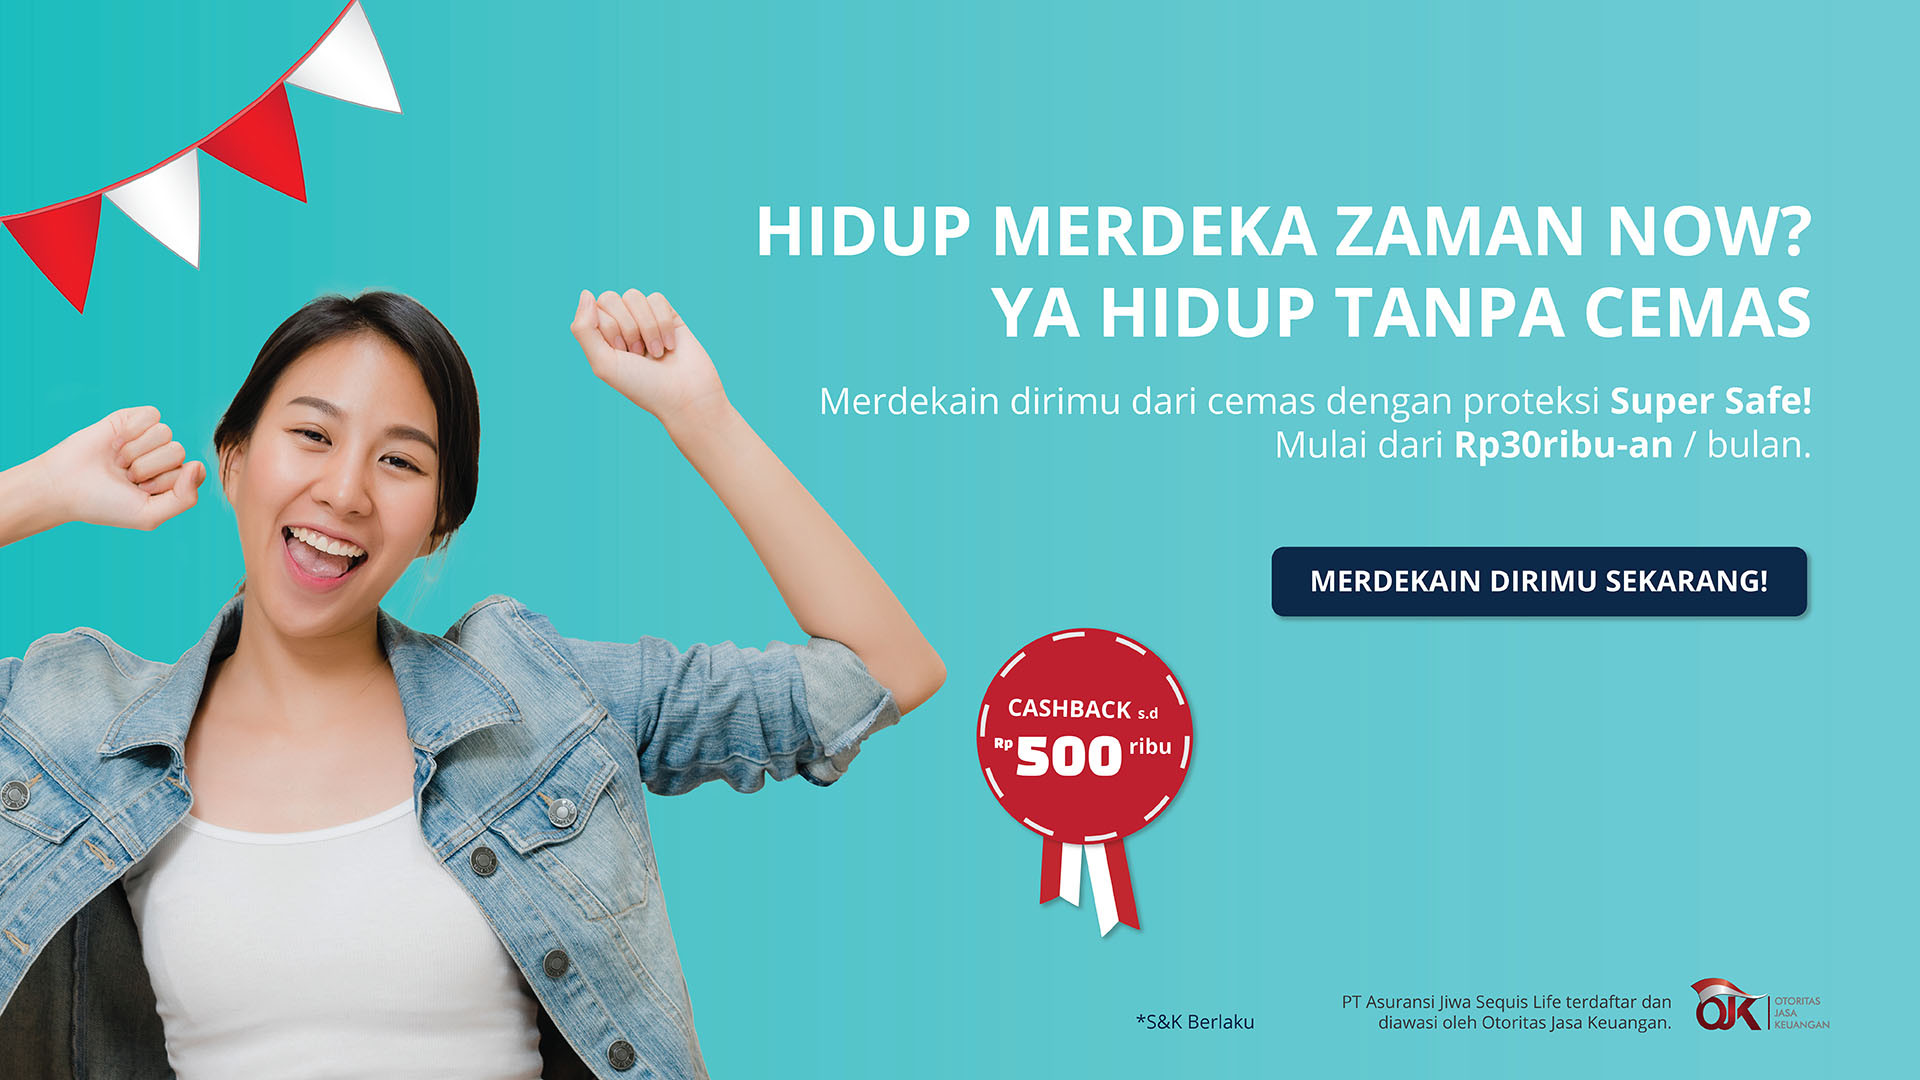 Indonesia merdeka, yuk merdekain diri dengan promo Super Merdeka